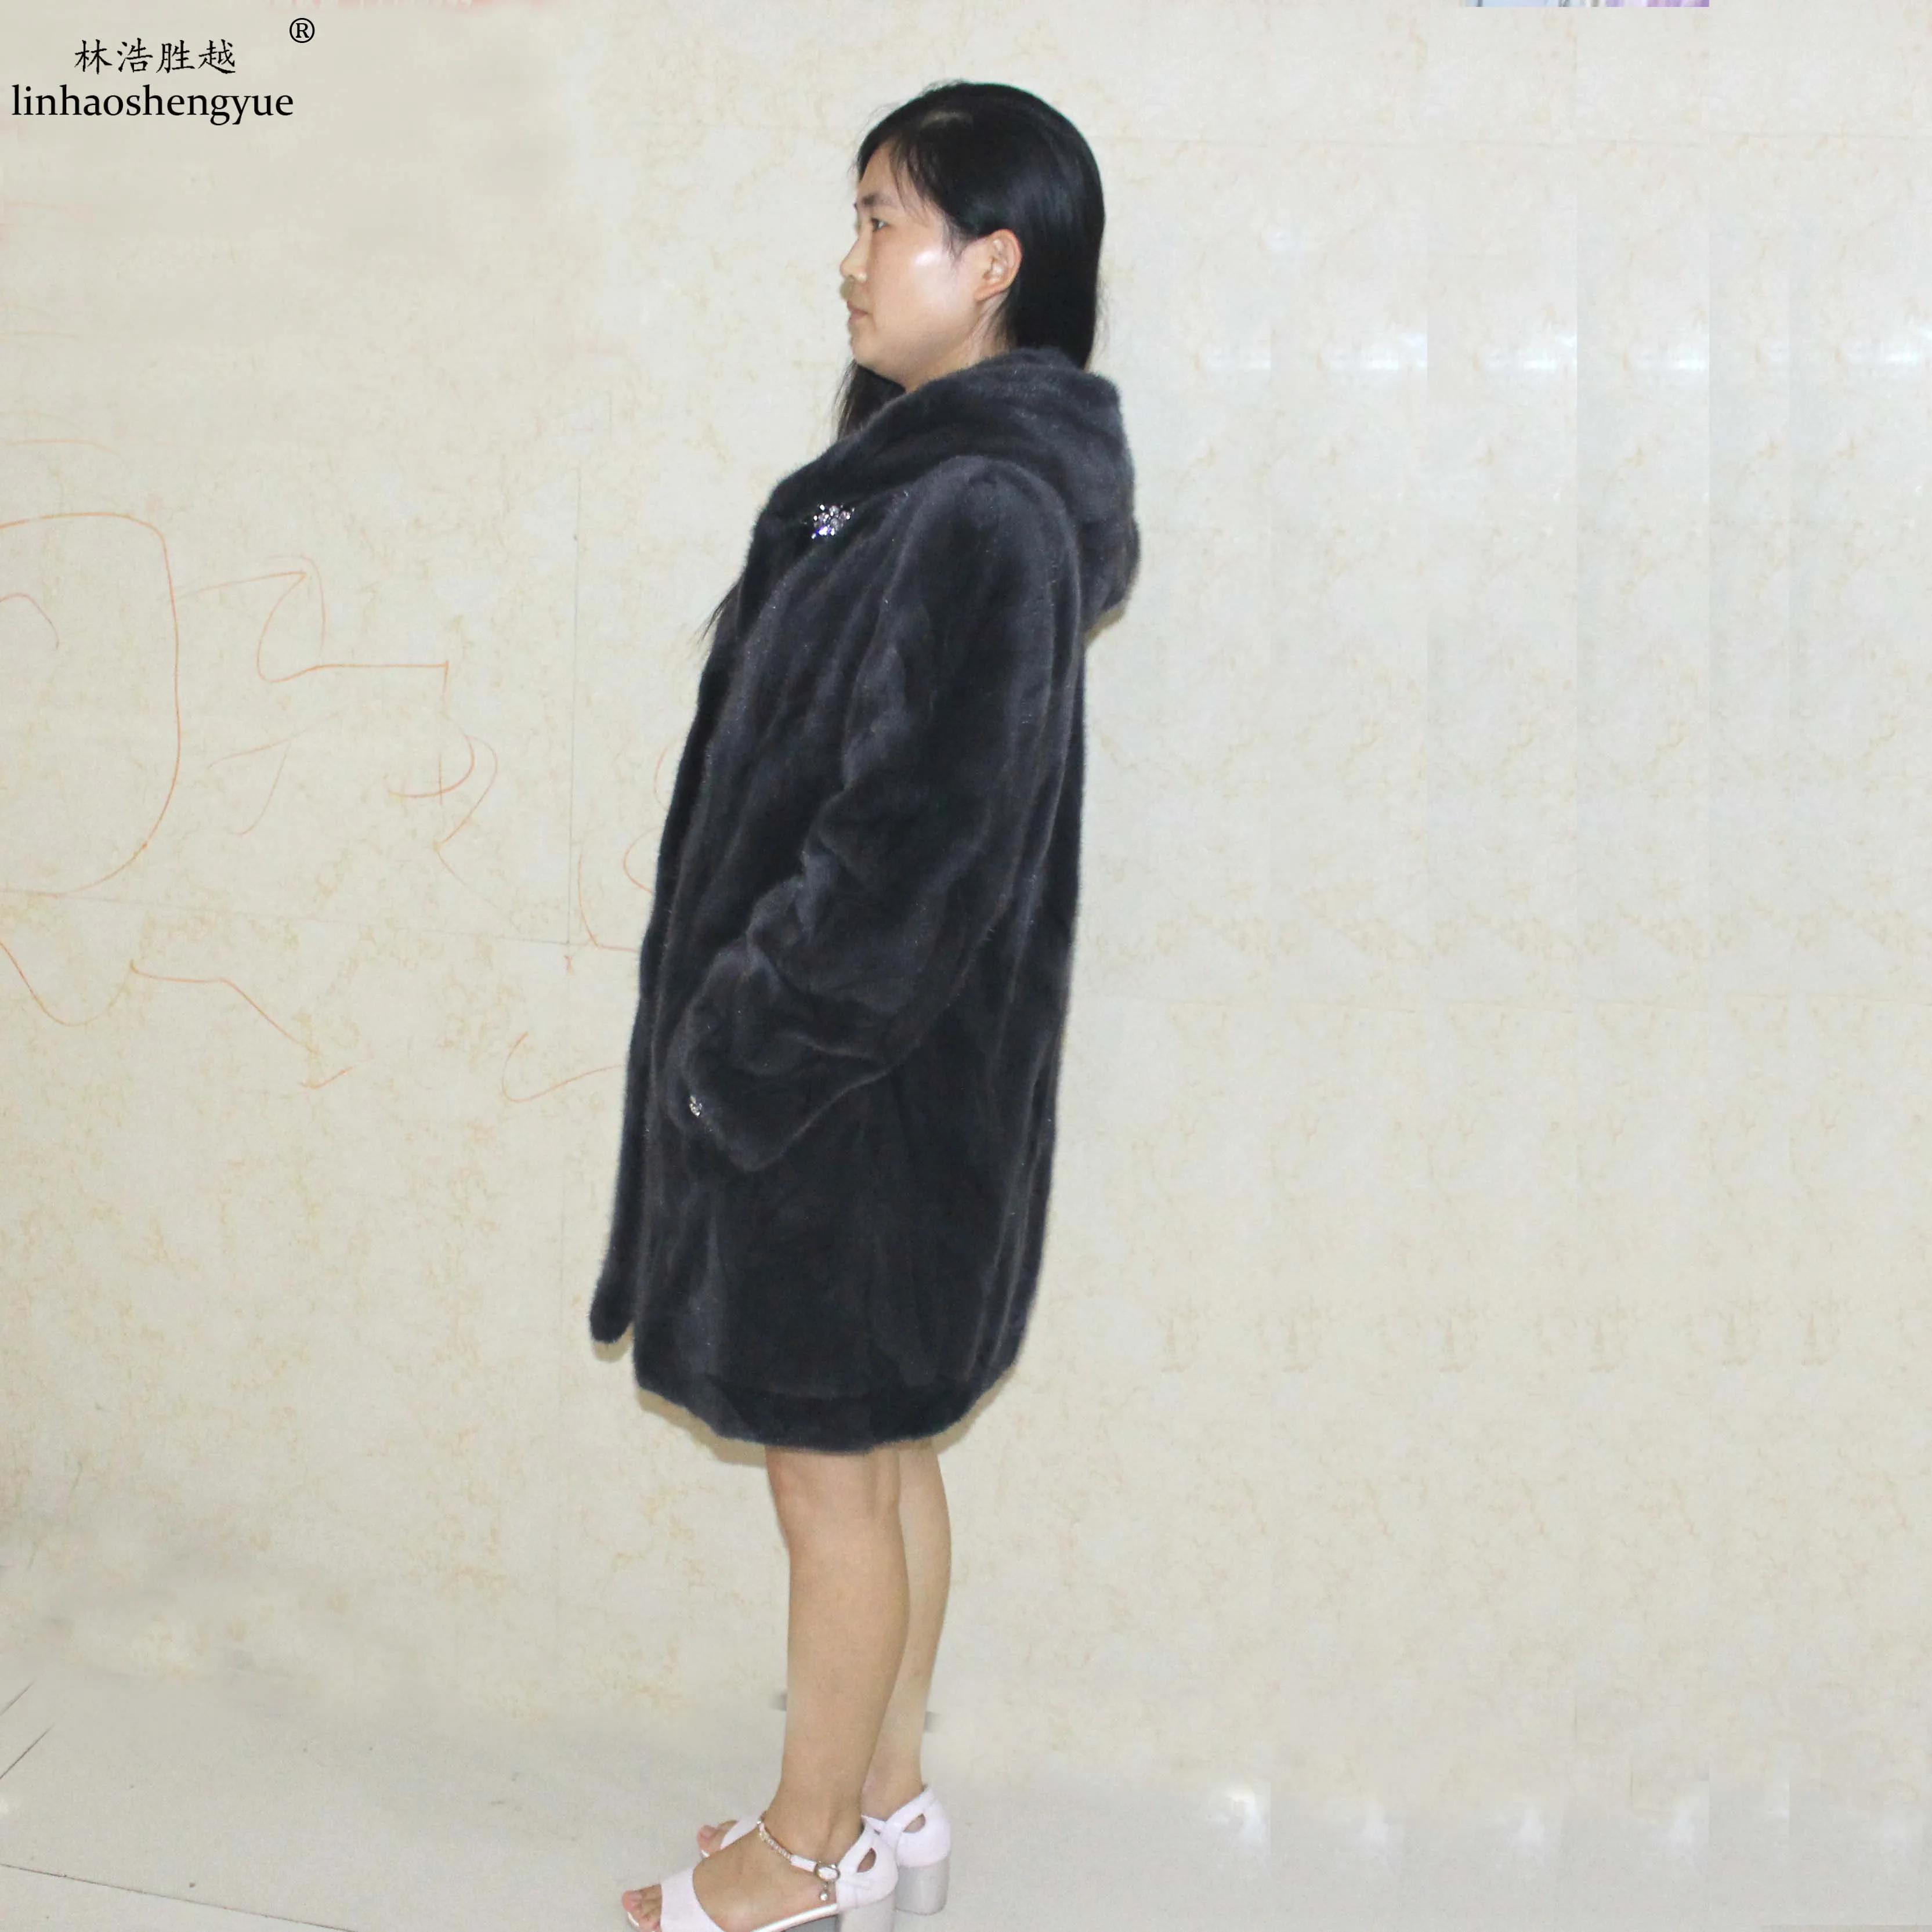 Linhaoshengyue  Fashion Women Winter Fur Coat  Real Mink Fur Coat enlarge